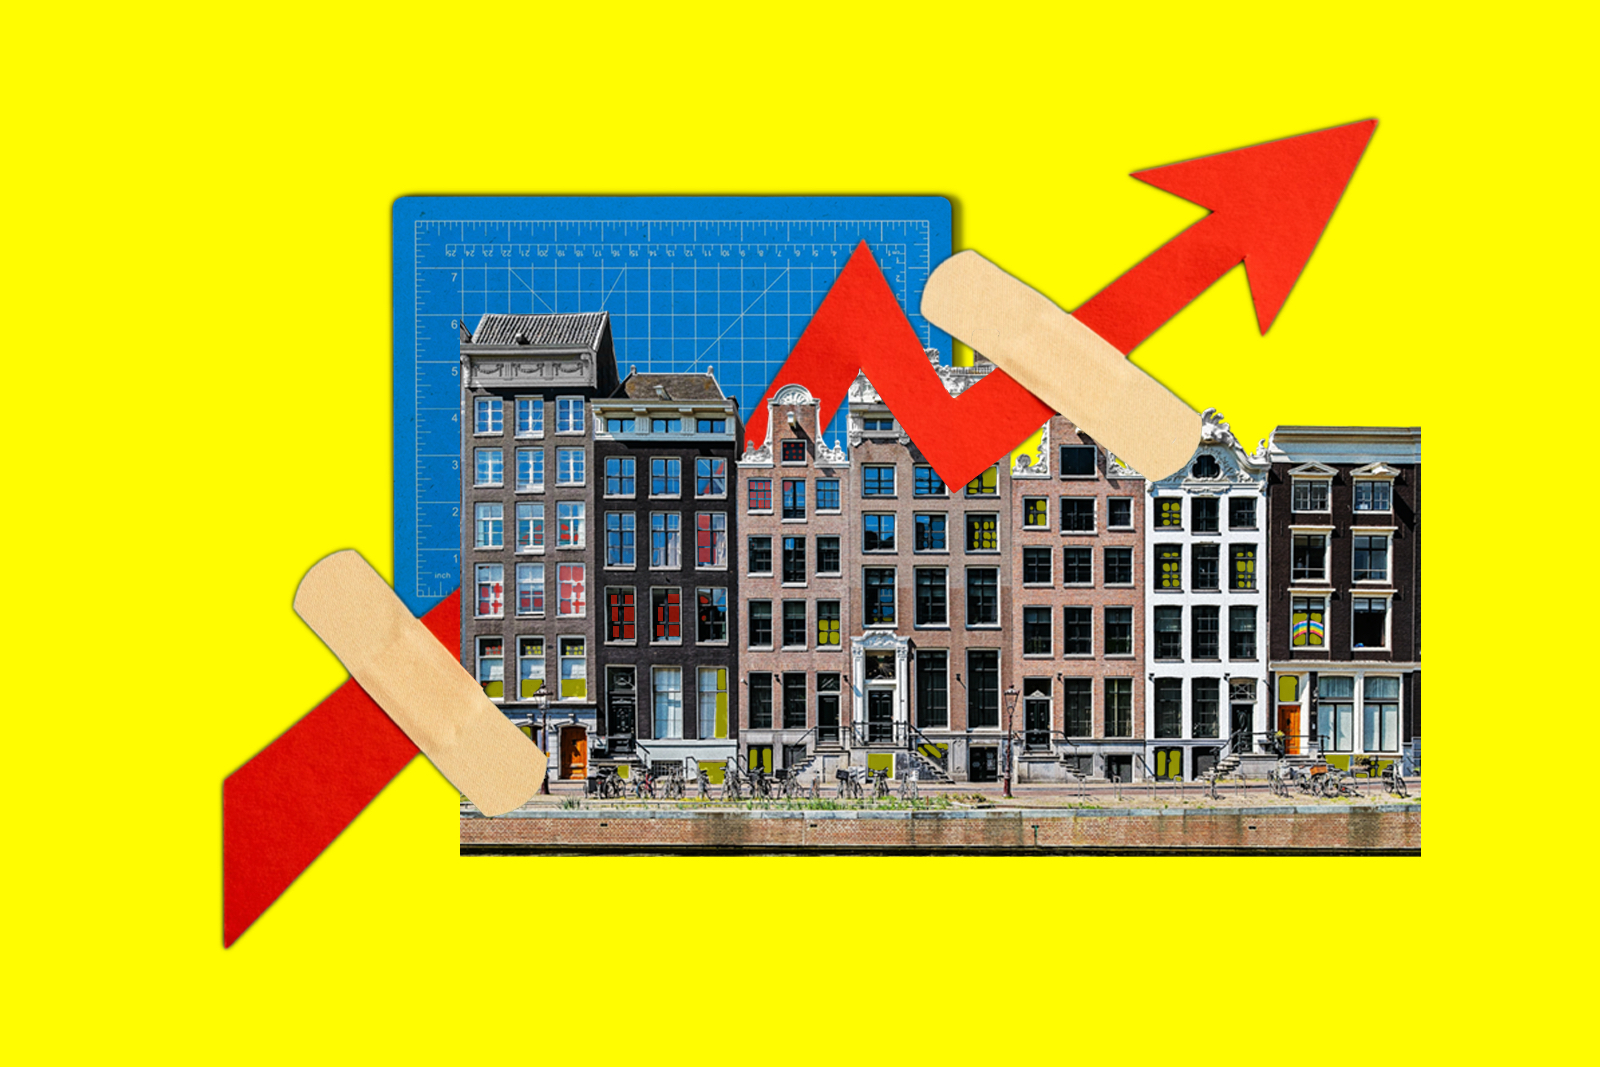 Amsterdam housing